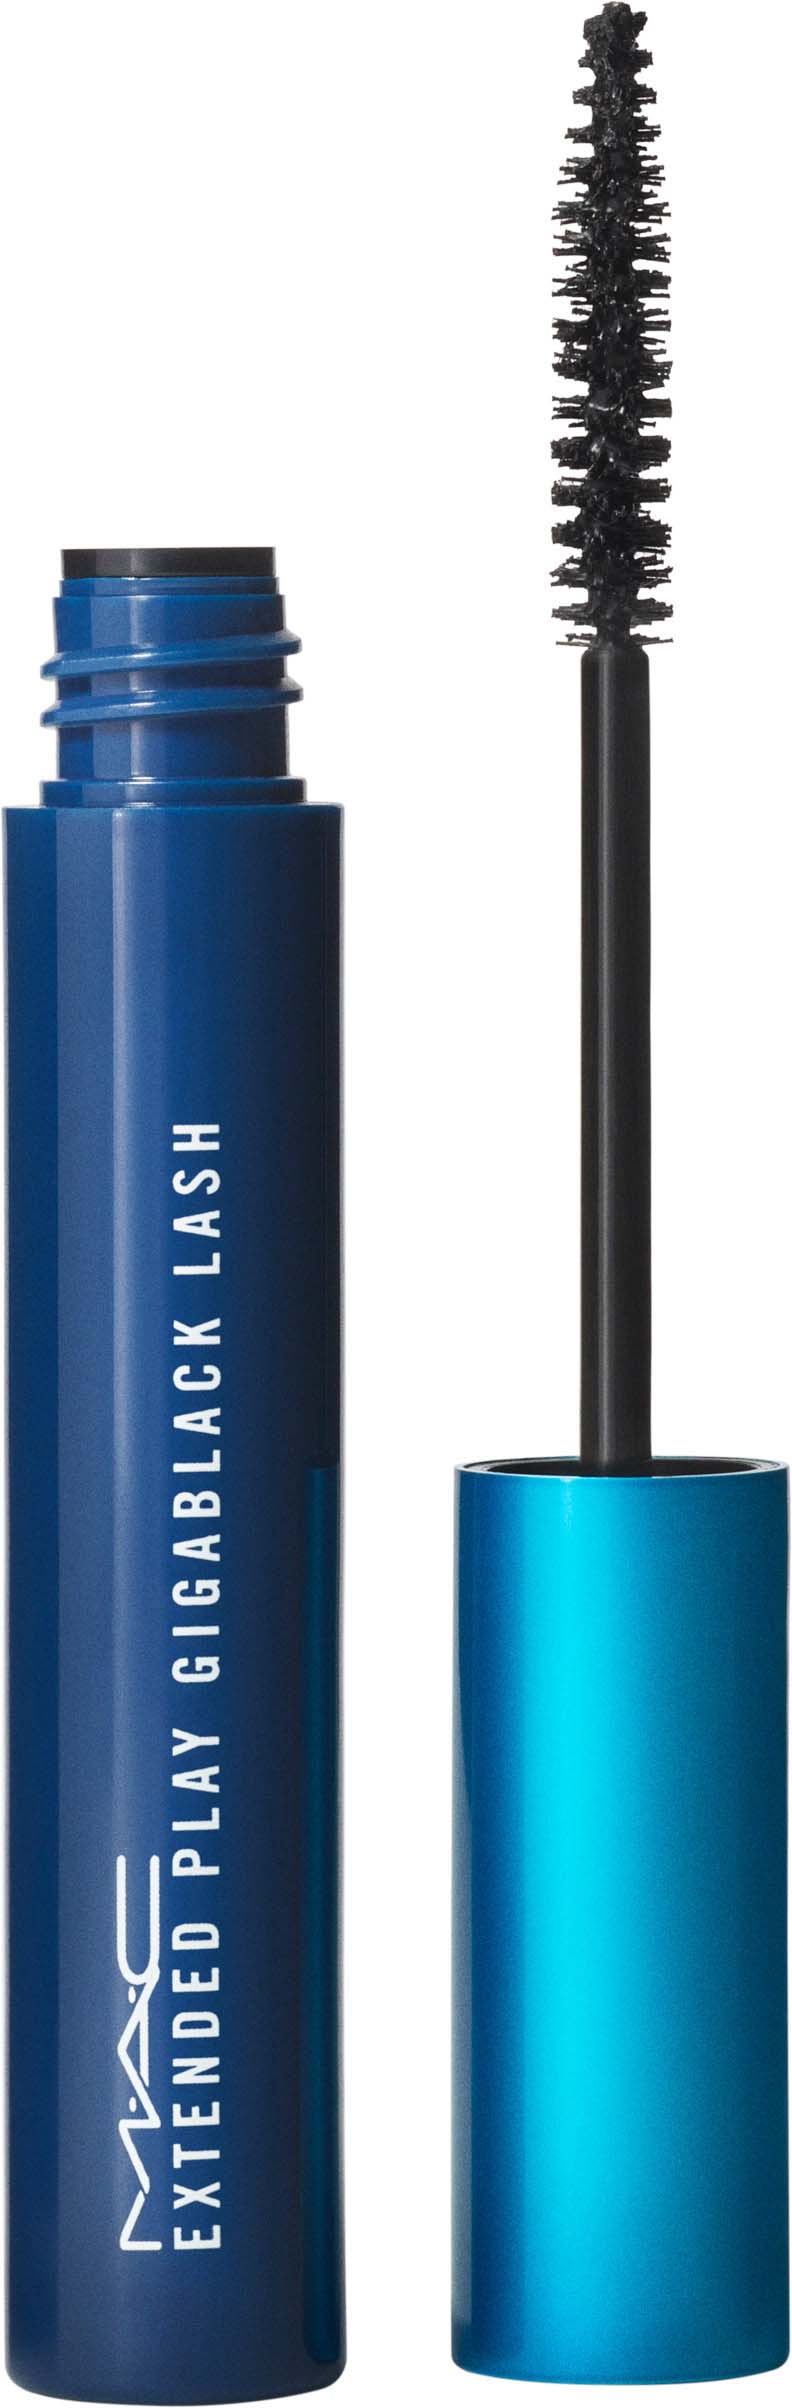 MAC Cosmetics Extended Play Gigablack Lash Mascara Intense Black |